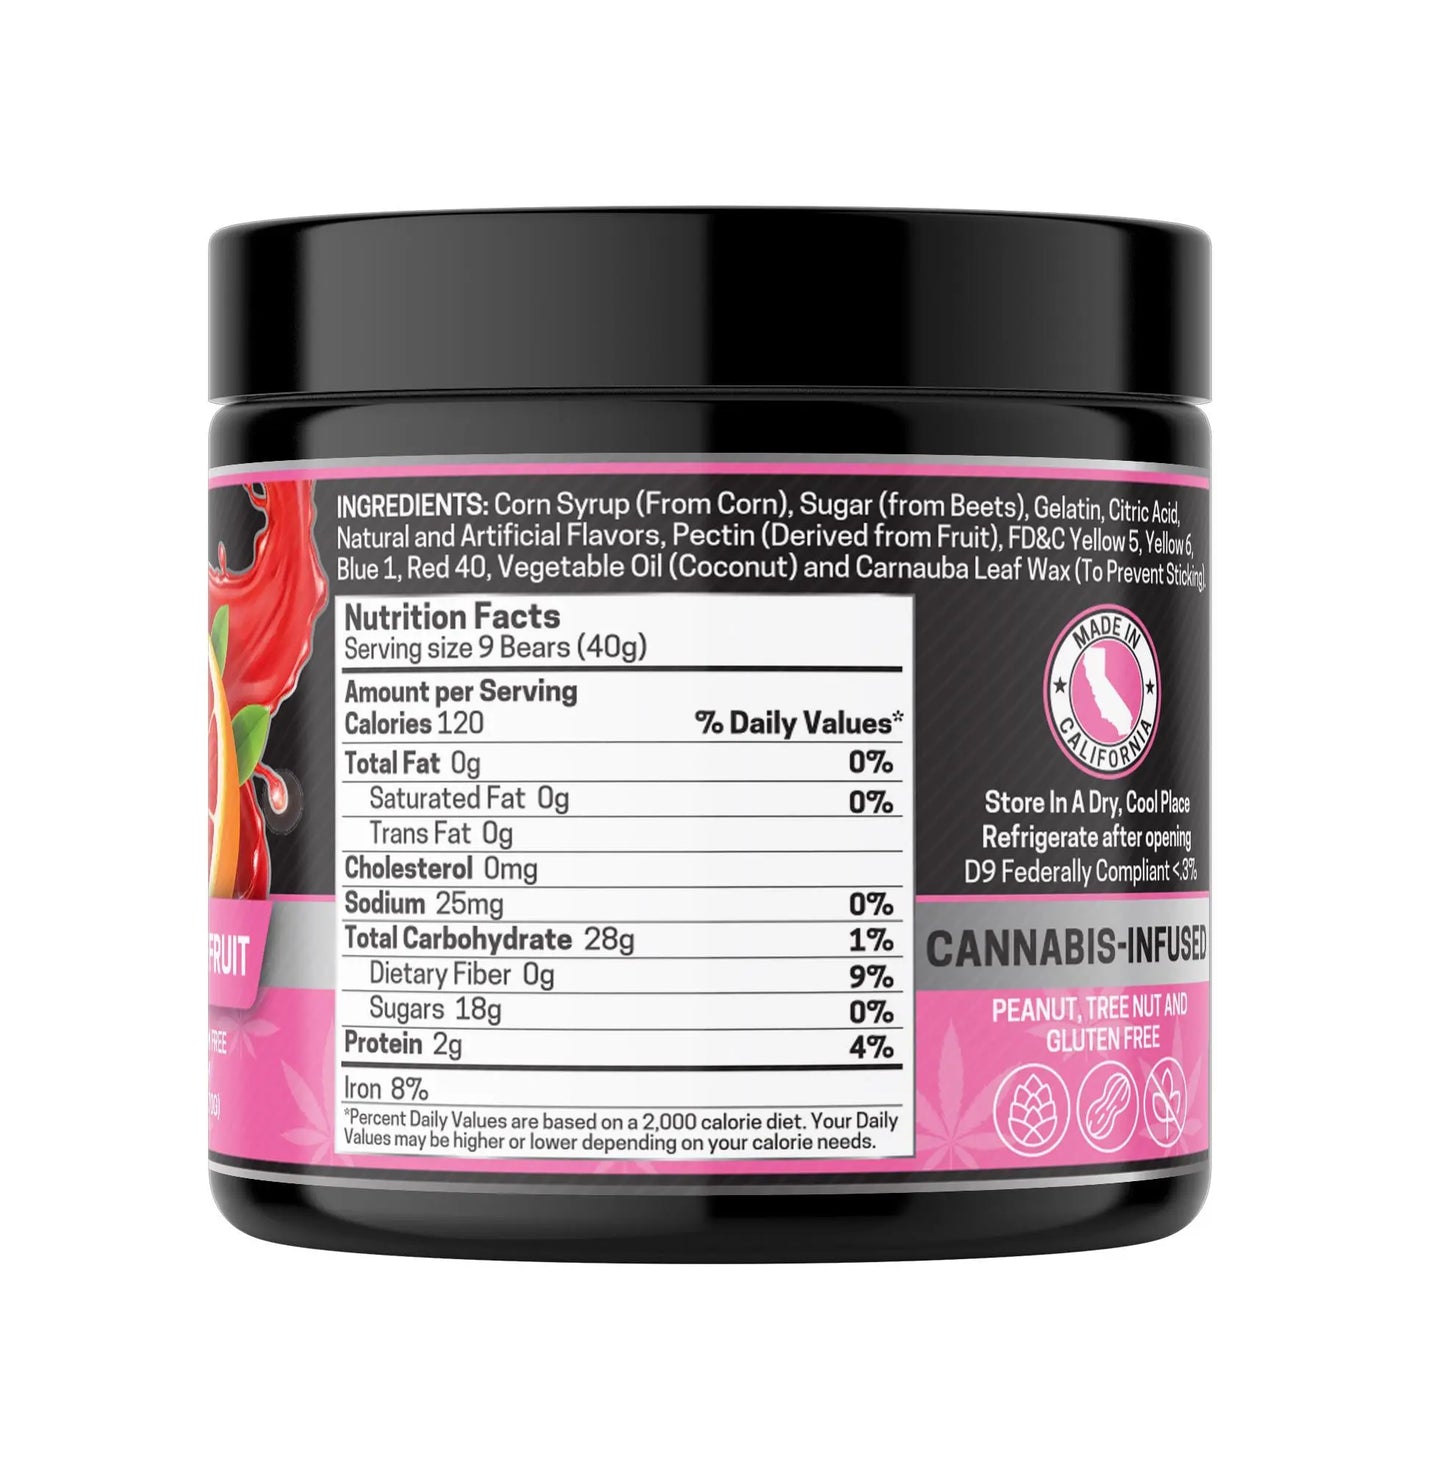 Delta 9 Gummies, Pink Grapefruit - 1000mg | 25 Pcs Gummies - Frisco Labs